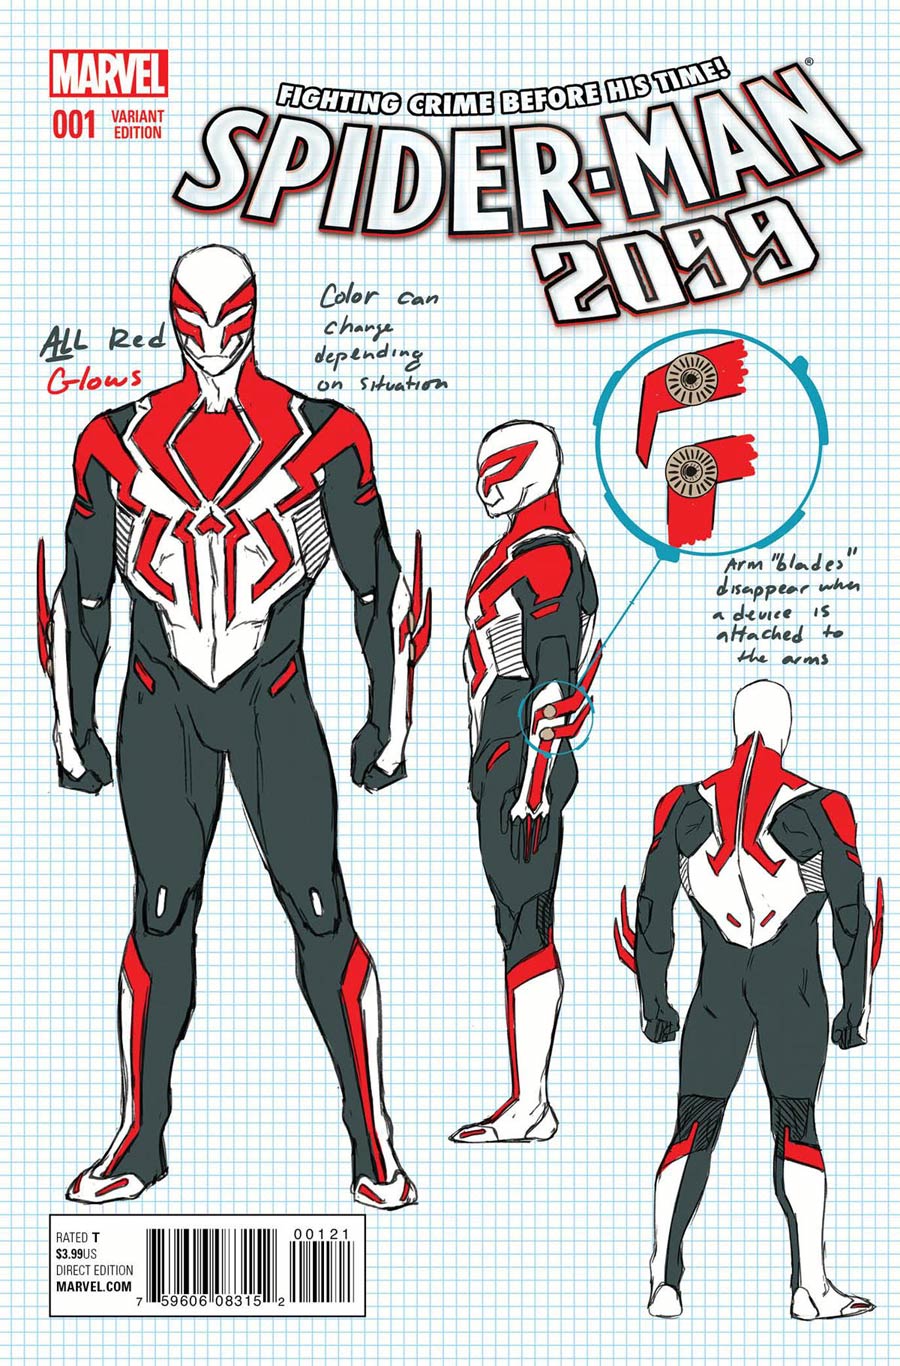 Spider-Man 2099 Vol 3 #1 Cover C Incentive Kris Anka Design Variant Cover